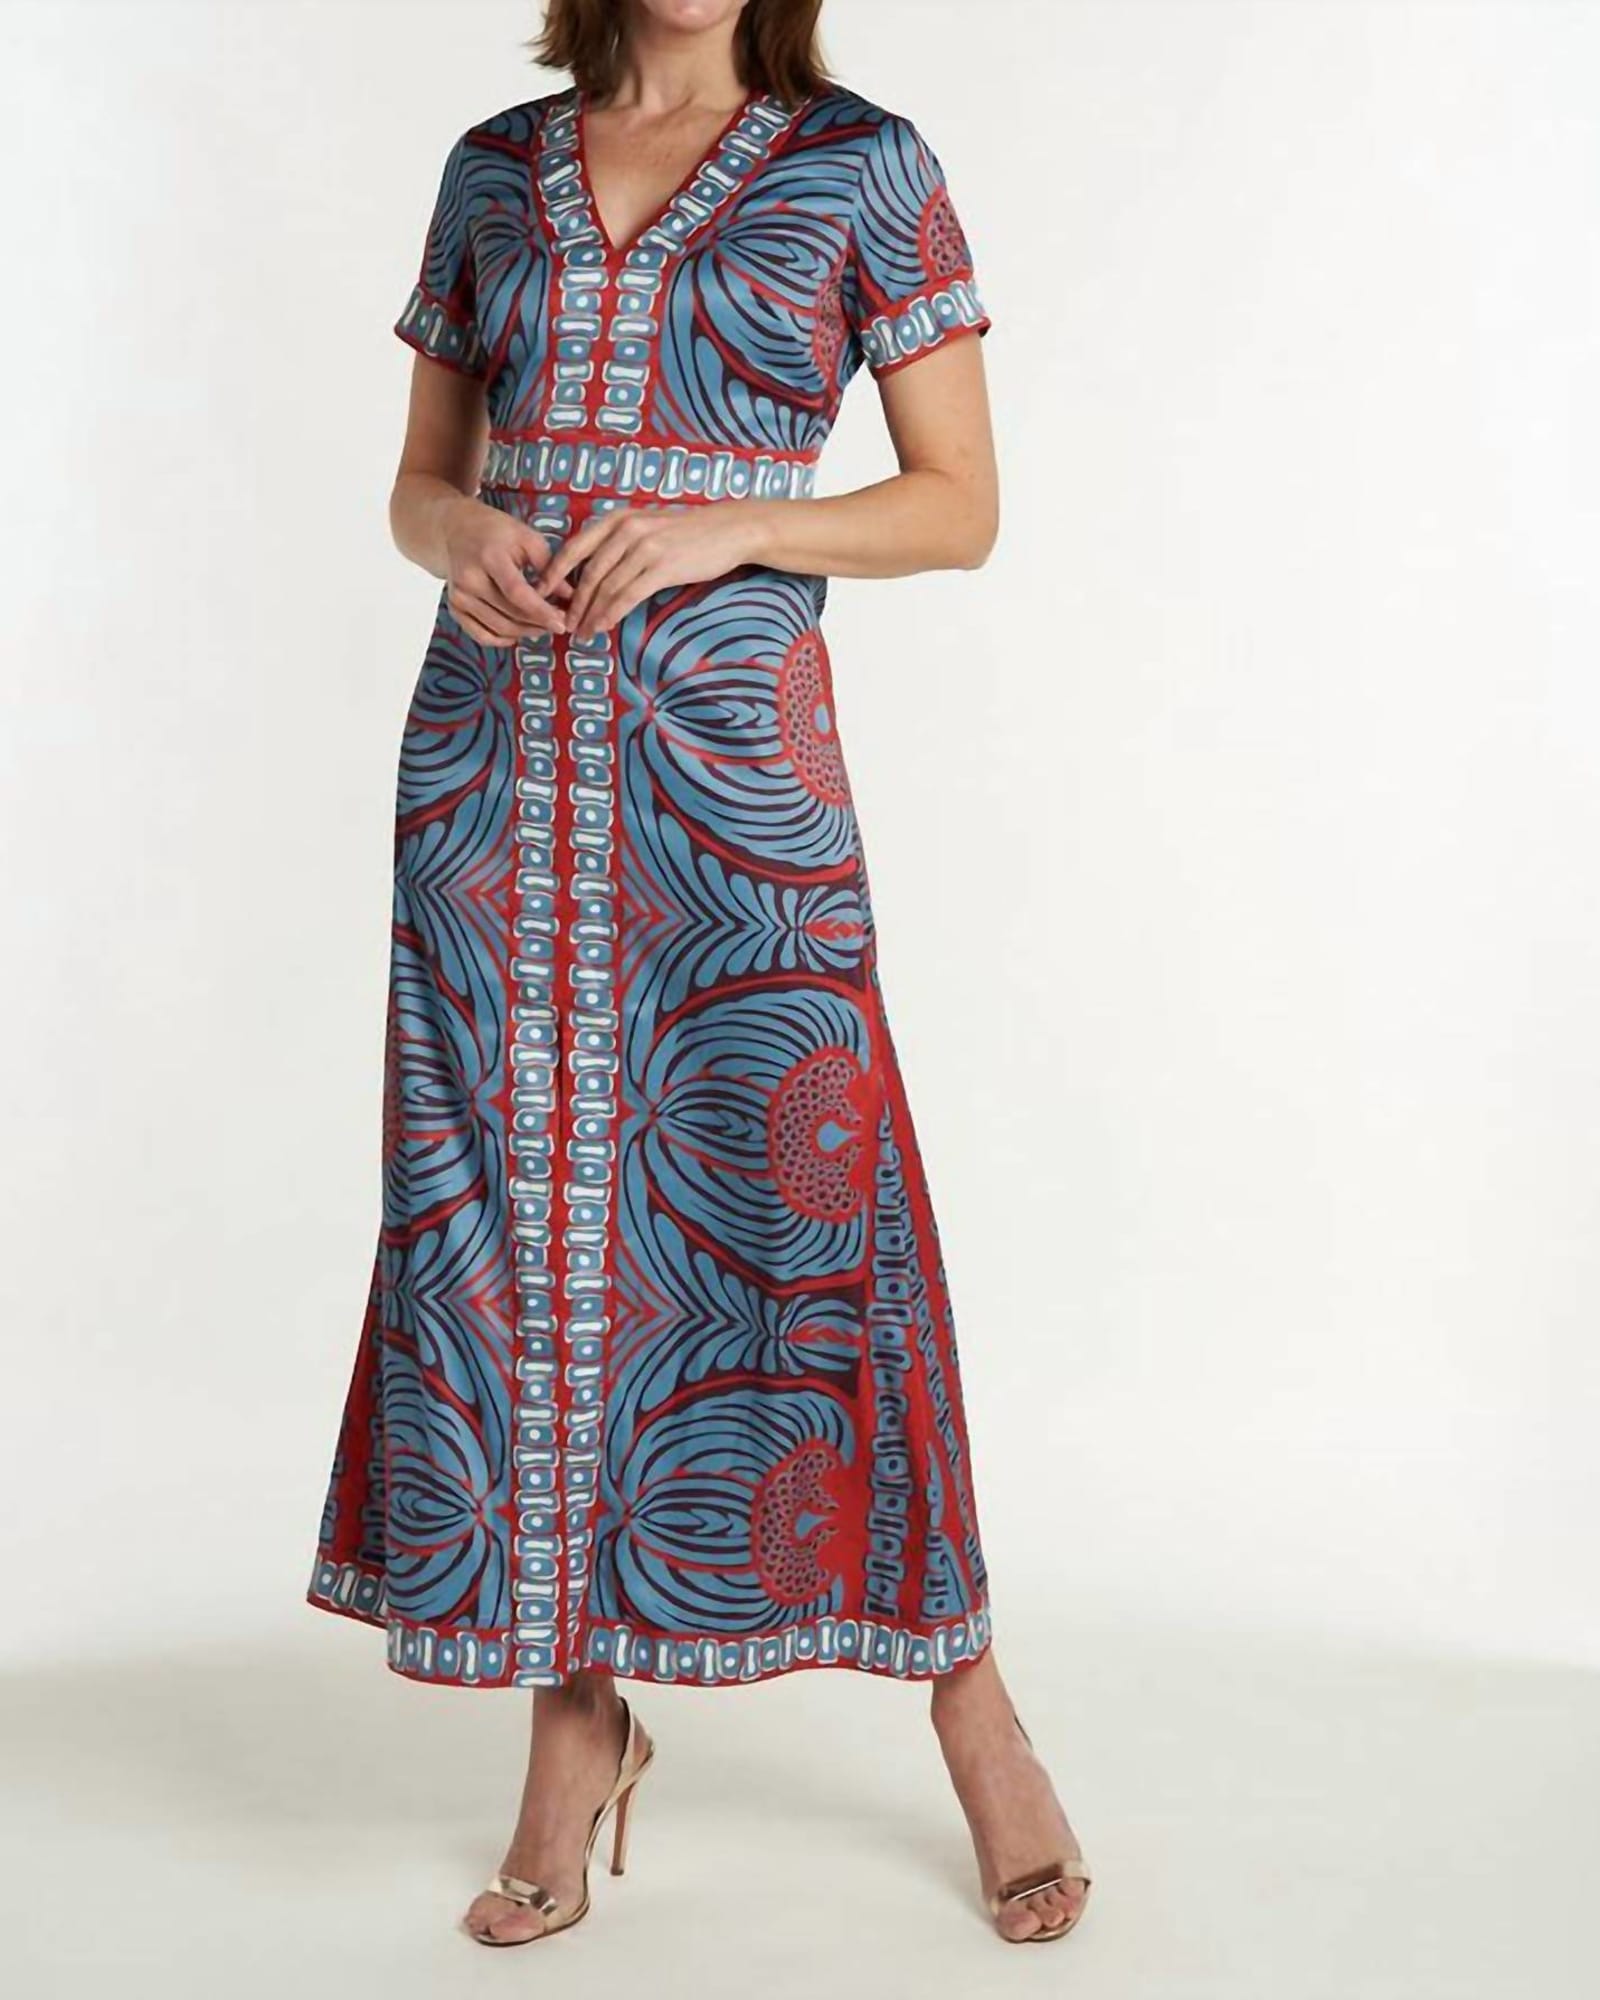 Leland Short Sleeve Dress In Frangipani Plum | Frangipani Plum